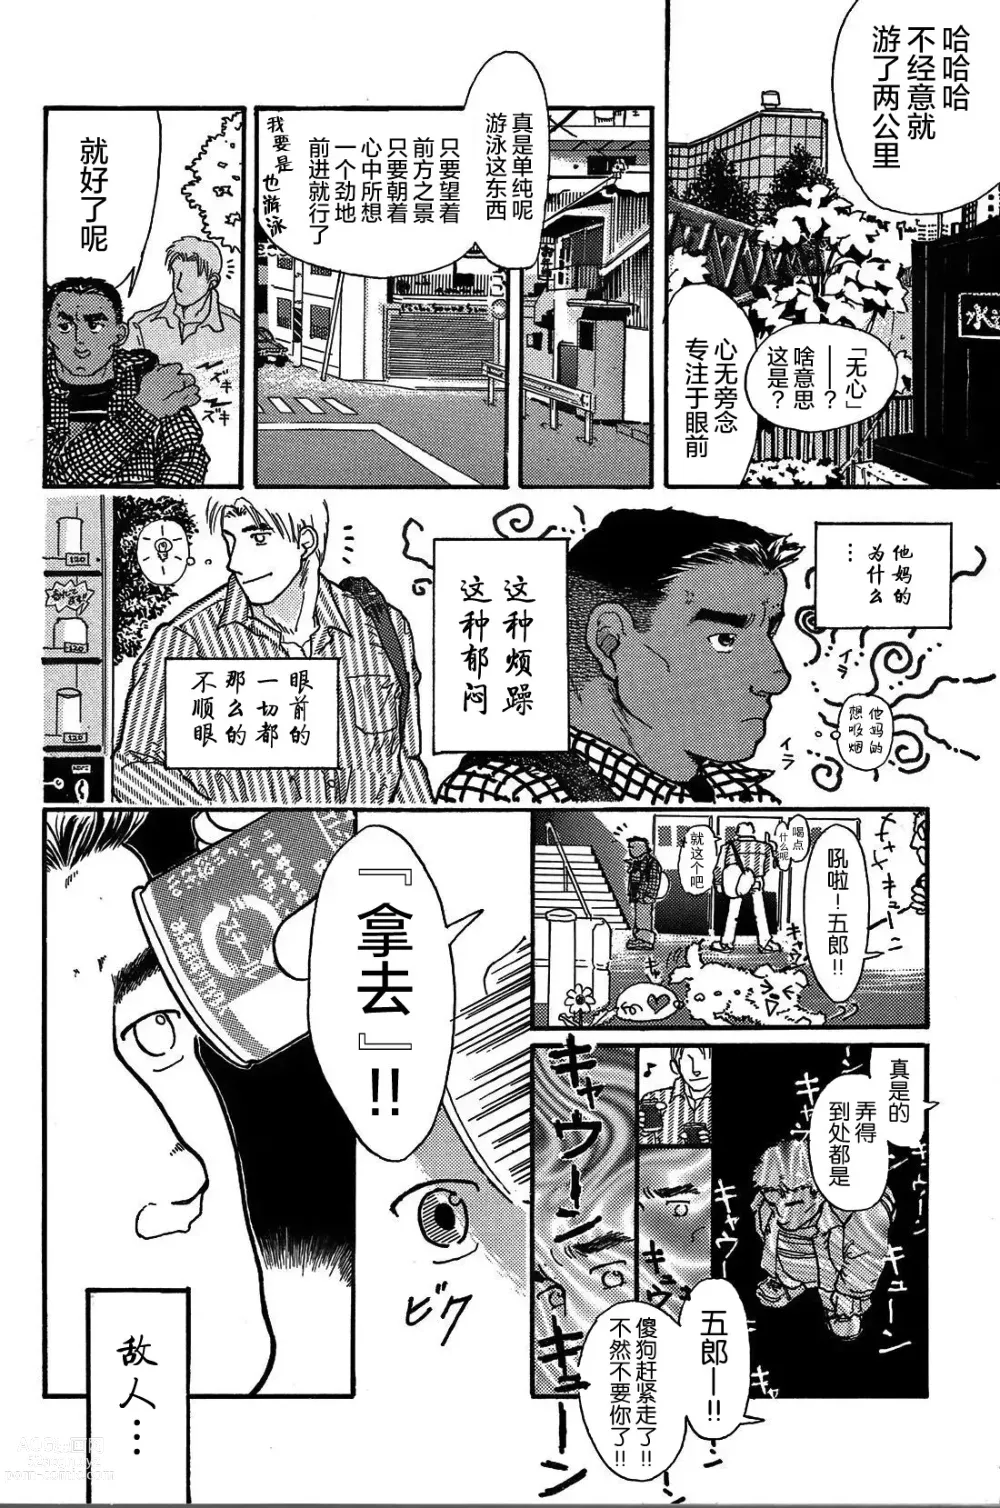 Page 10 of manga 纯情!! 第二章 「爱情的模样」